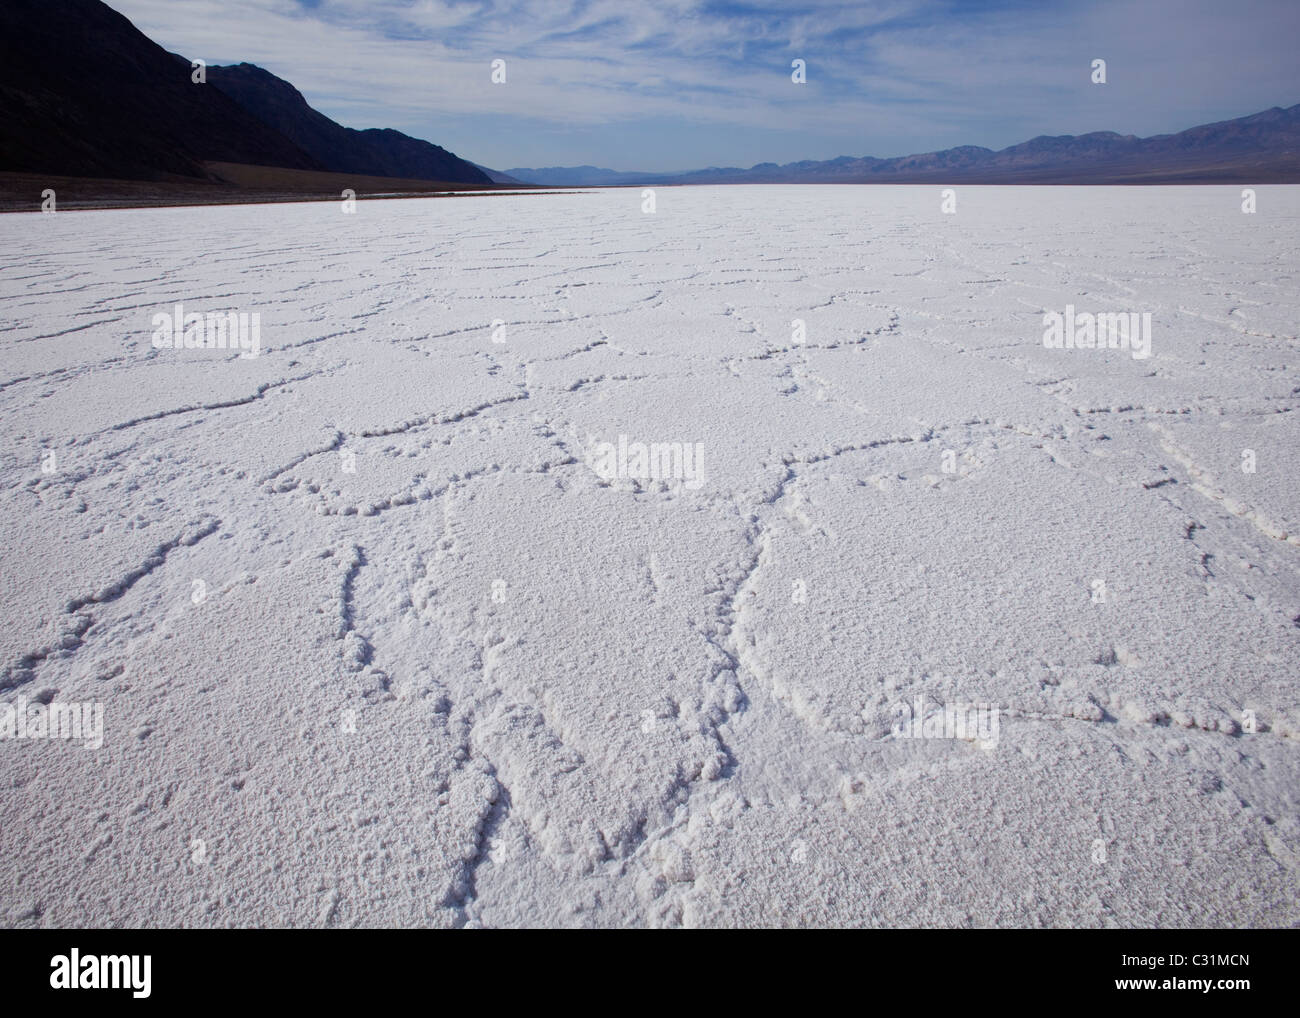 Badwater dry salt lake bed (salt flats) - Death Valley, California USA Stock Photo